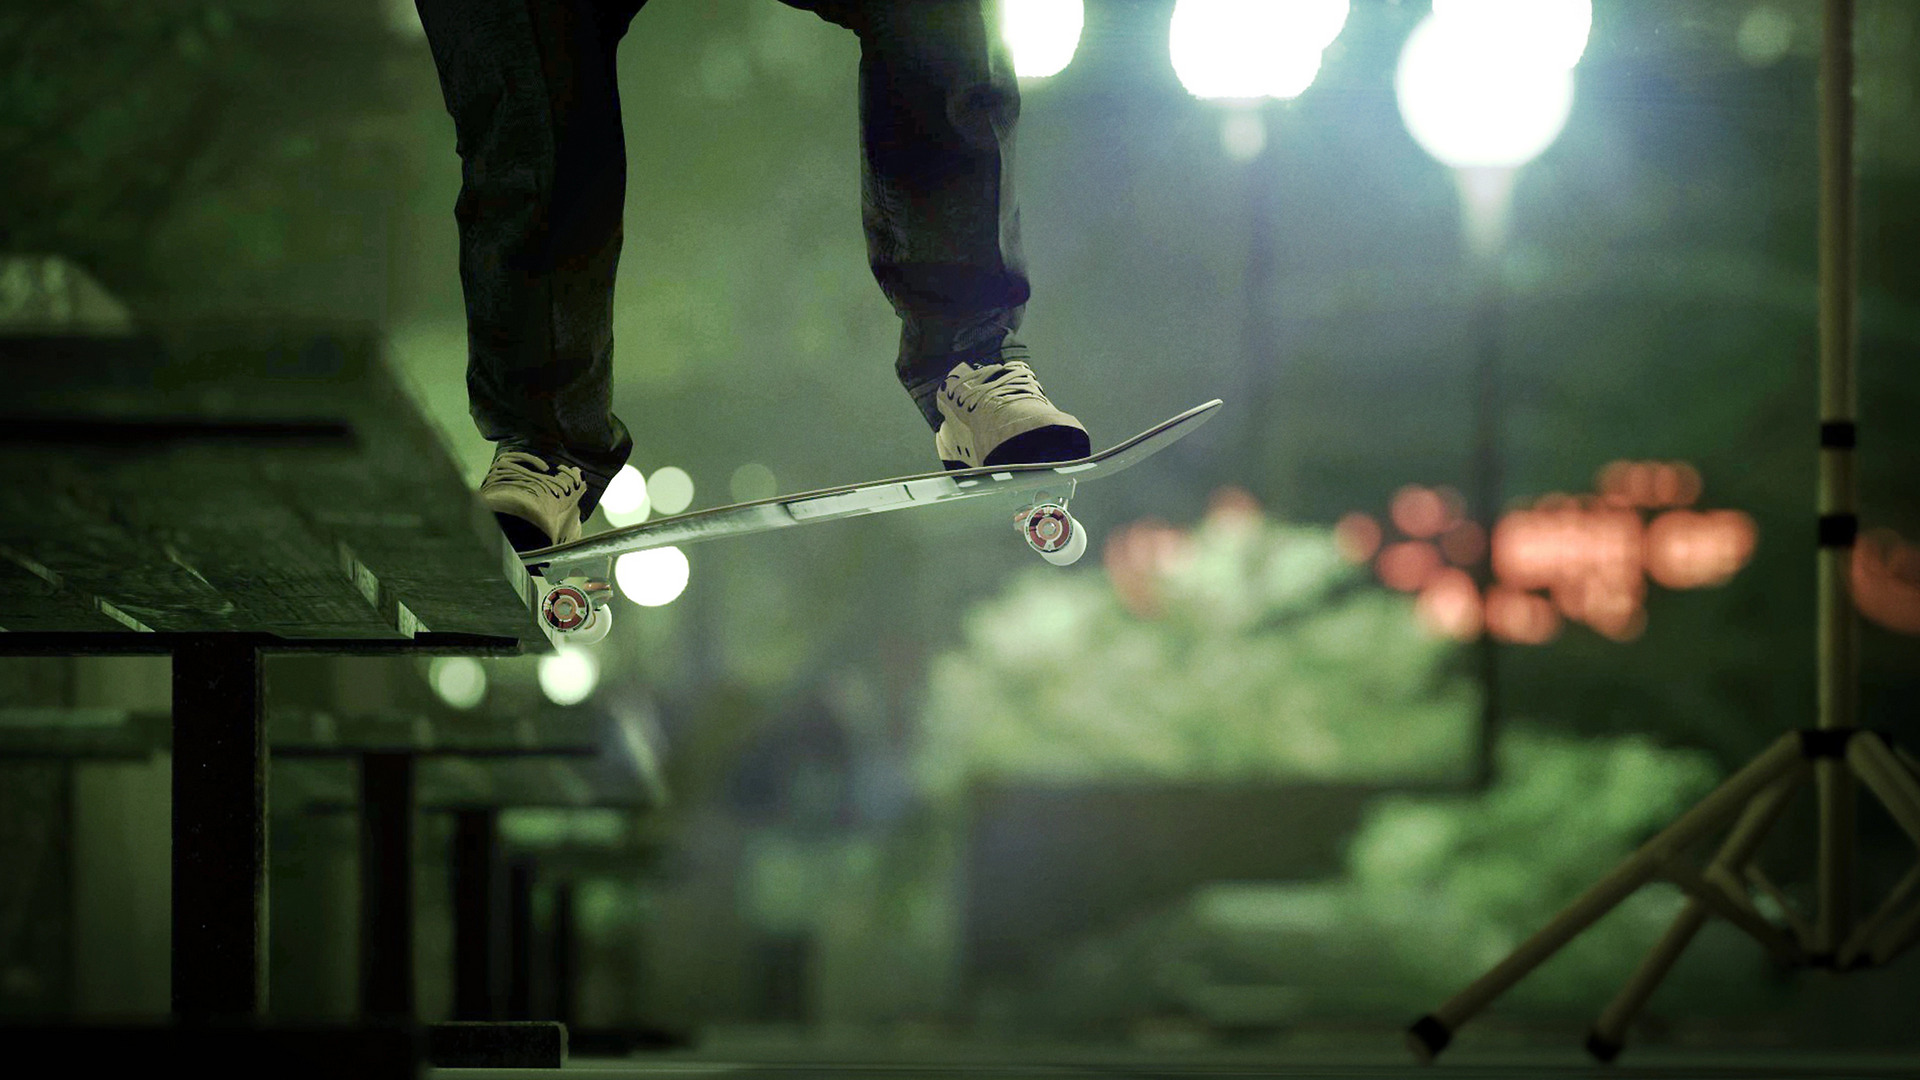 session-skate-sim-pc-screenshot-3